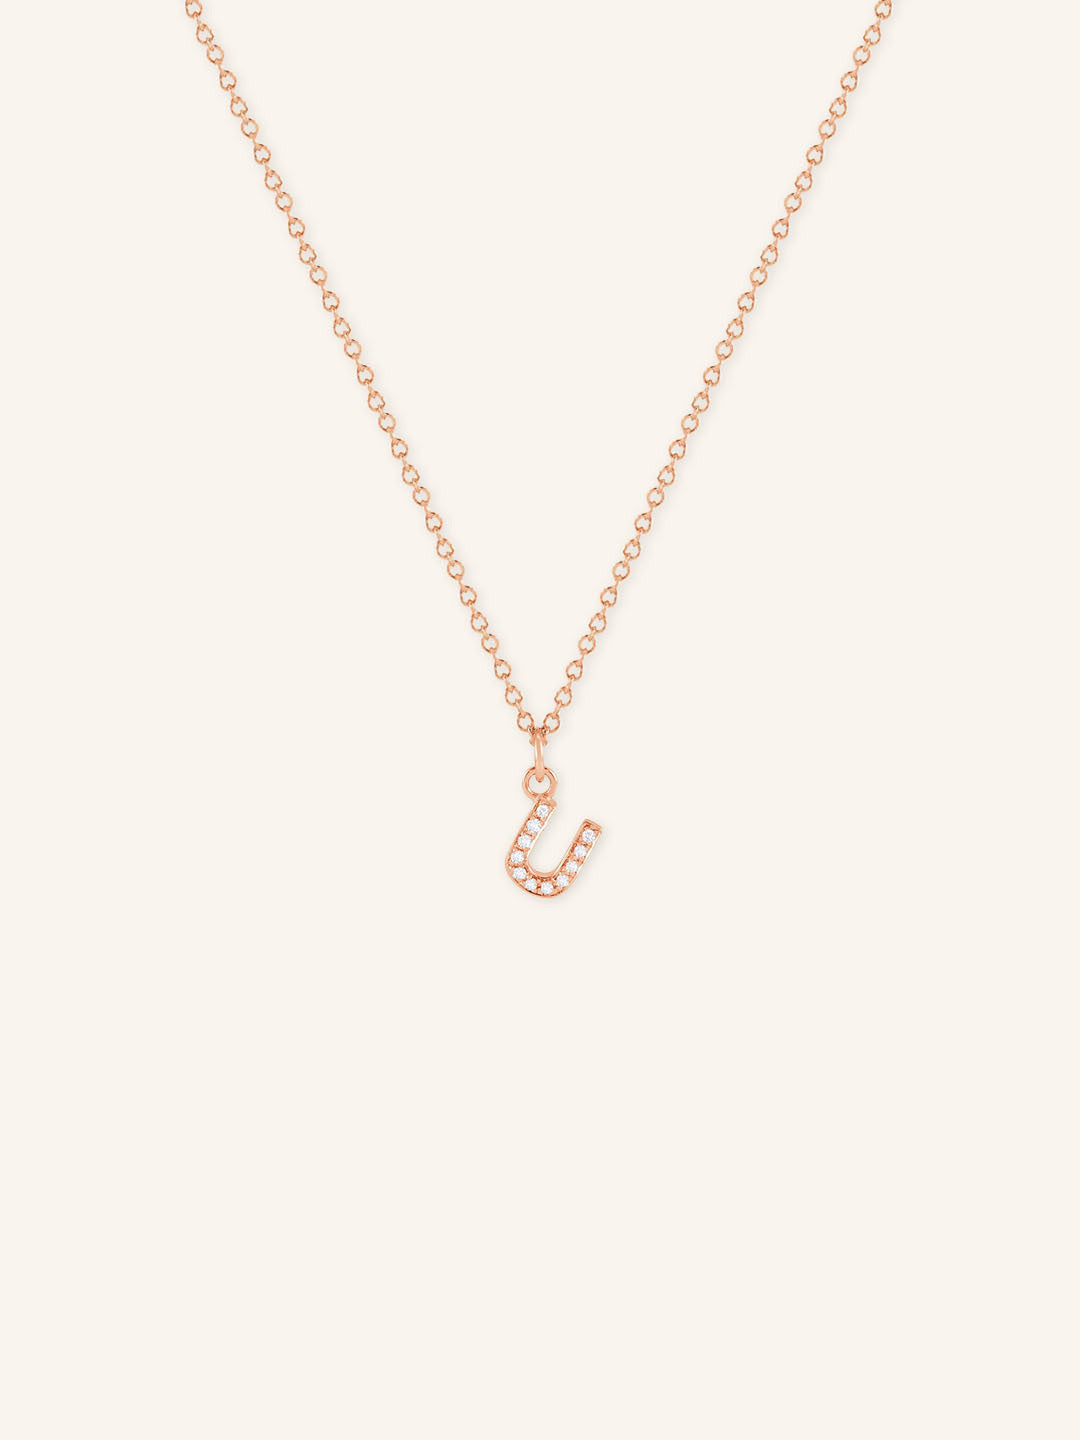 Initial "U" Diamond Necklace